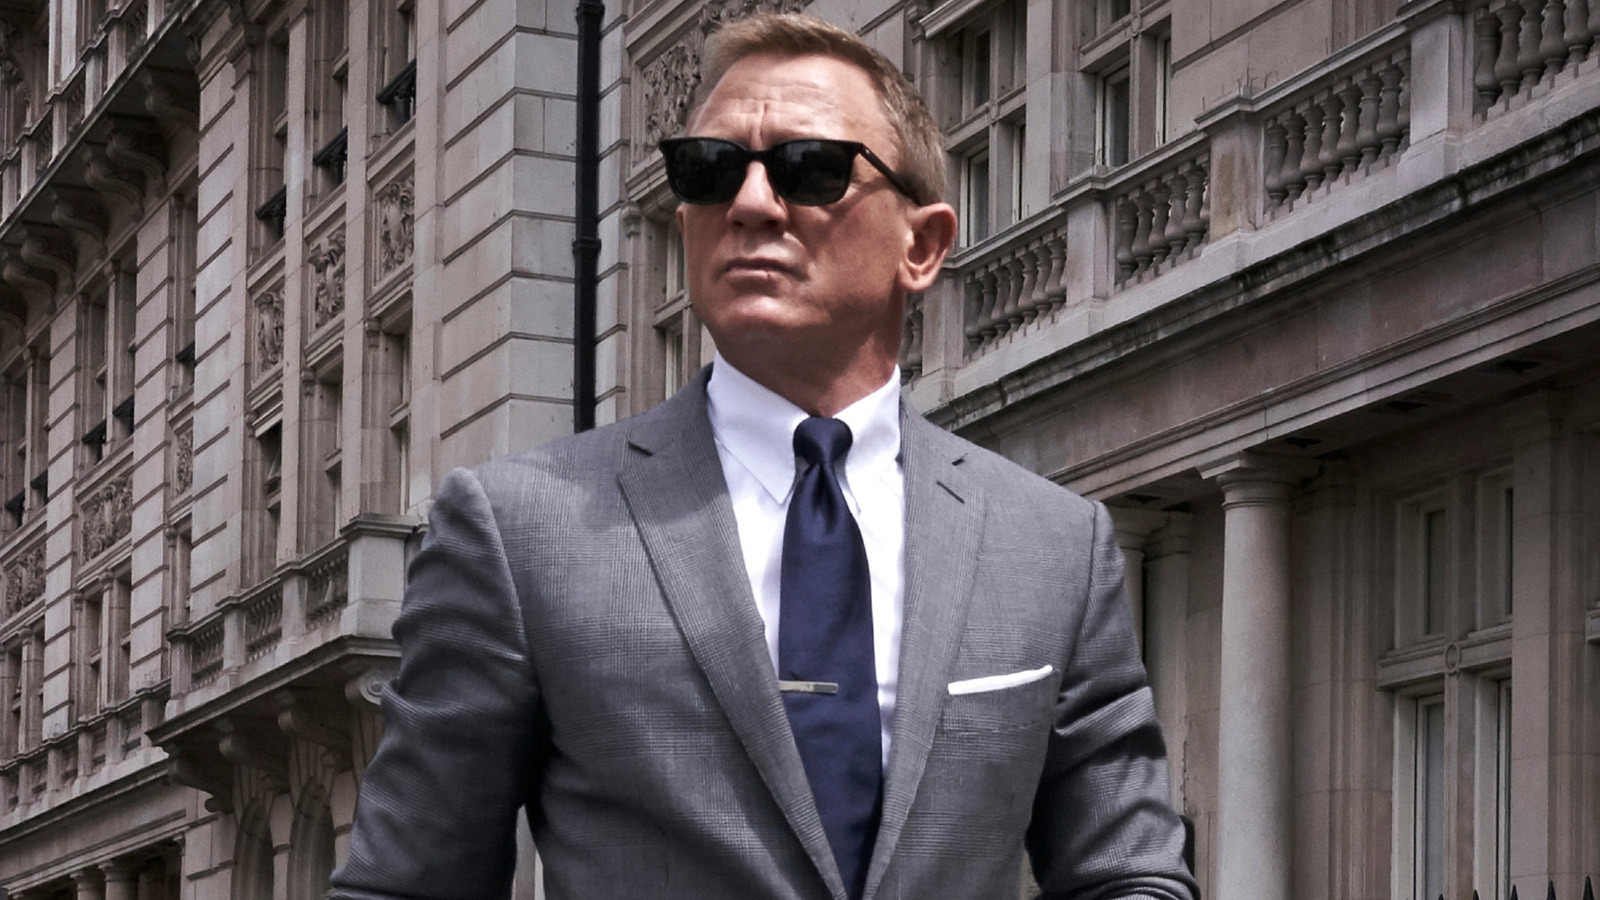 #A Ridley Scott-Related Fire Forced A James Bond Set To Be Rebuilt